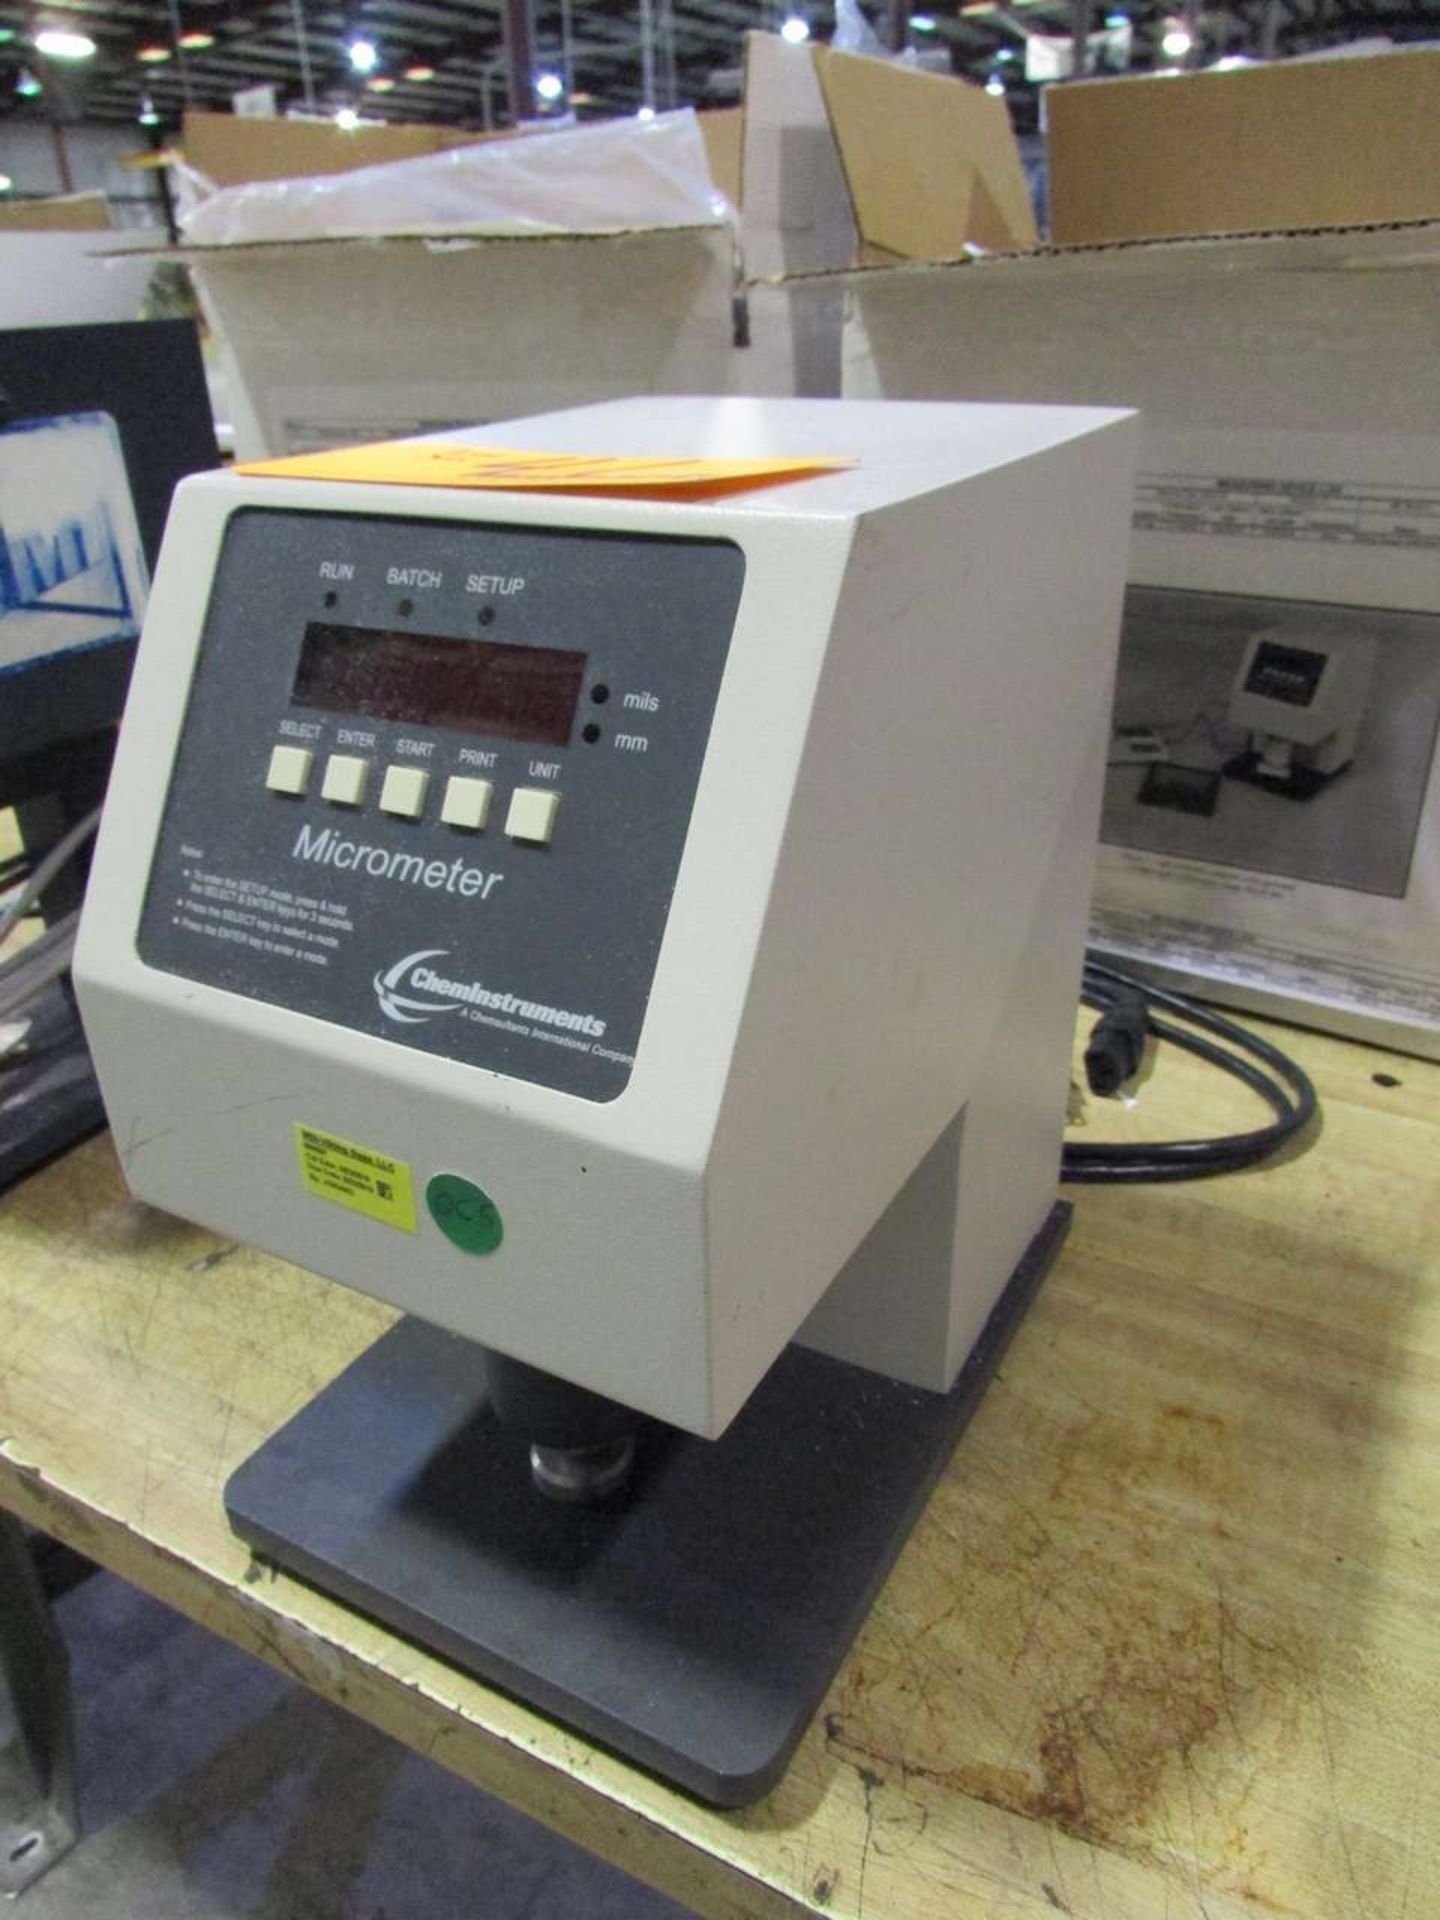 ChemInstruments MI-1000 Digital Micrometers